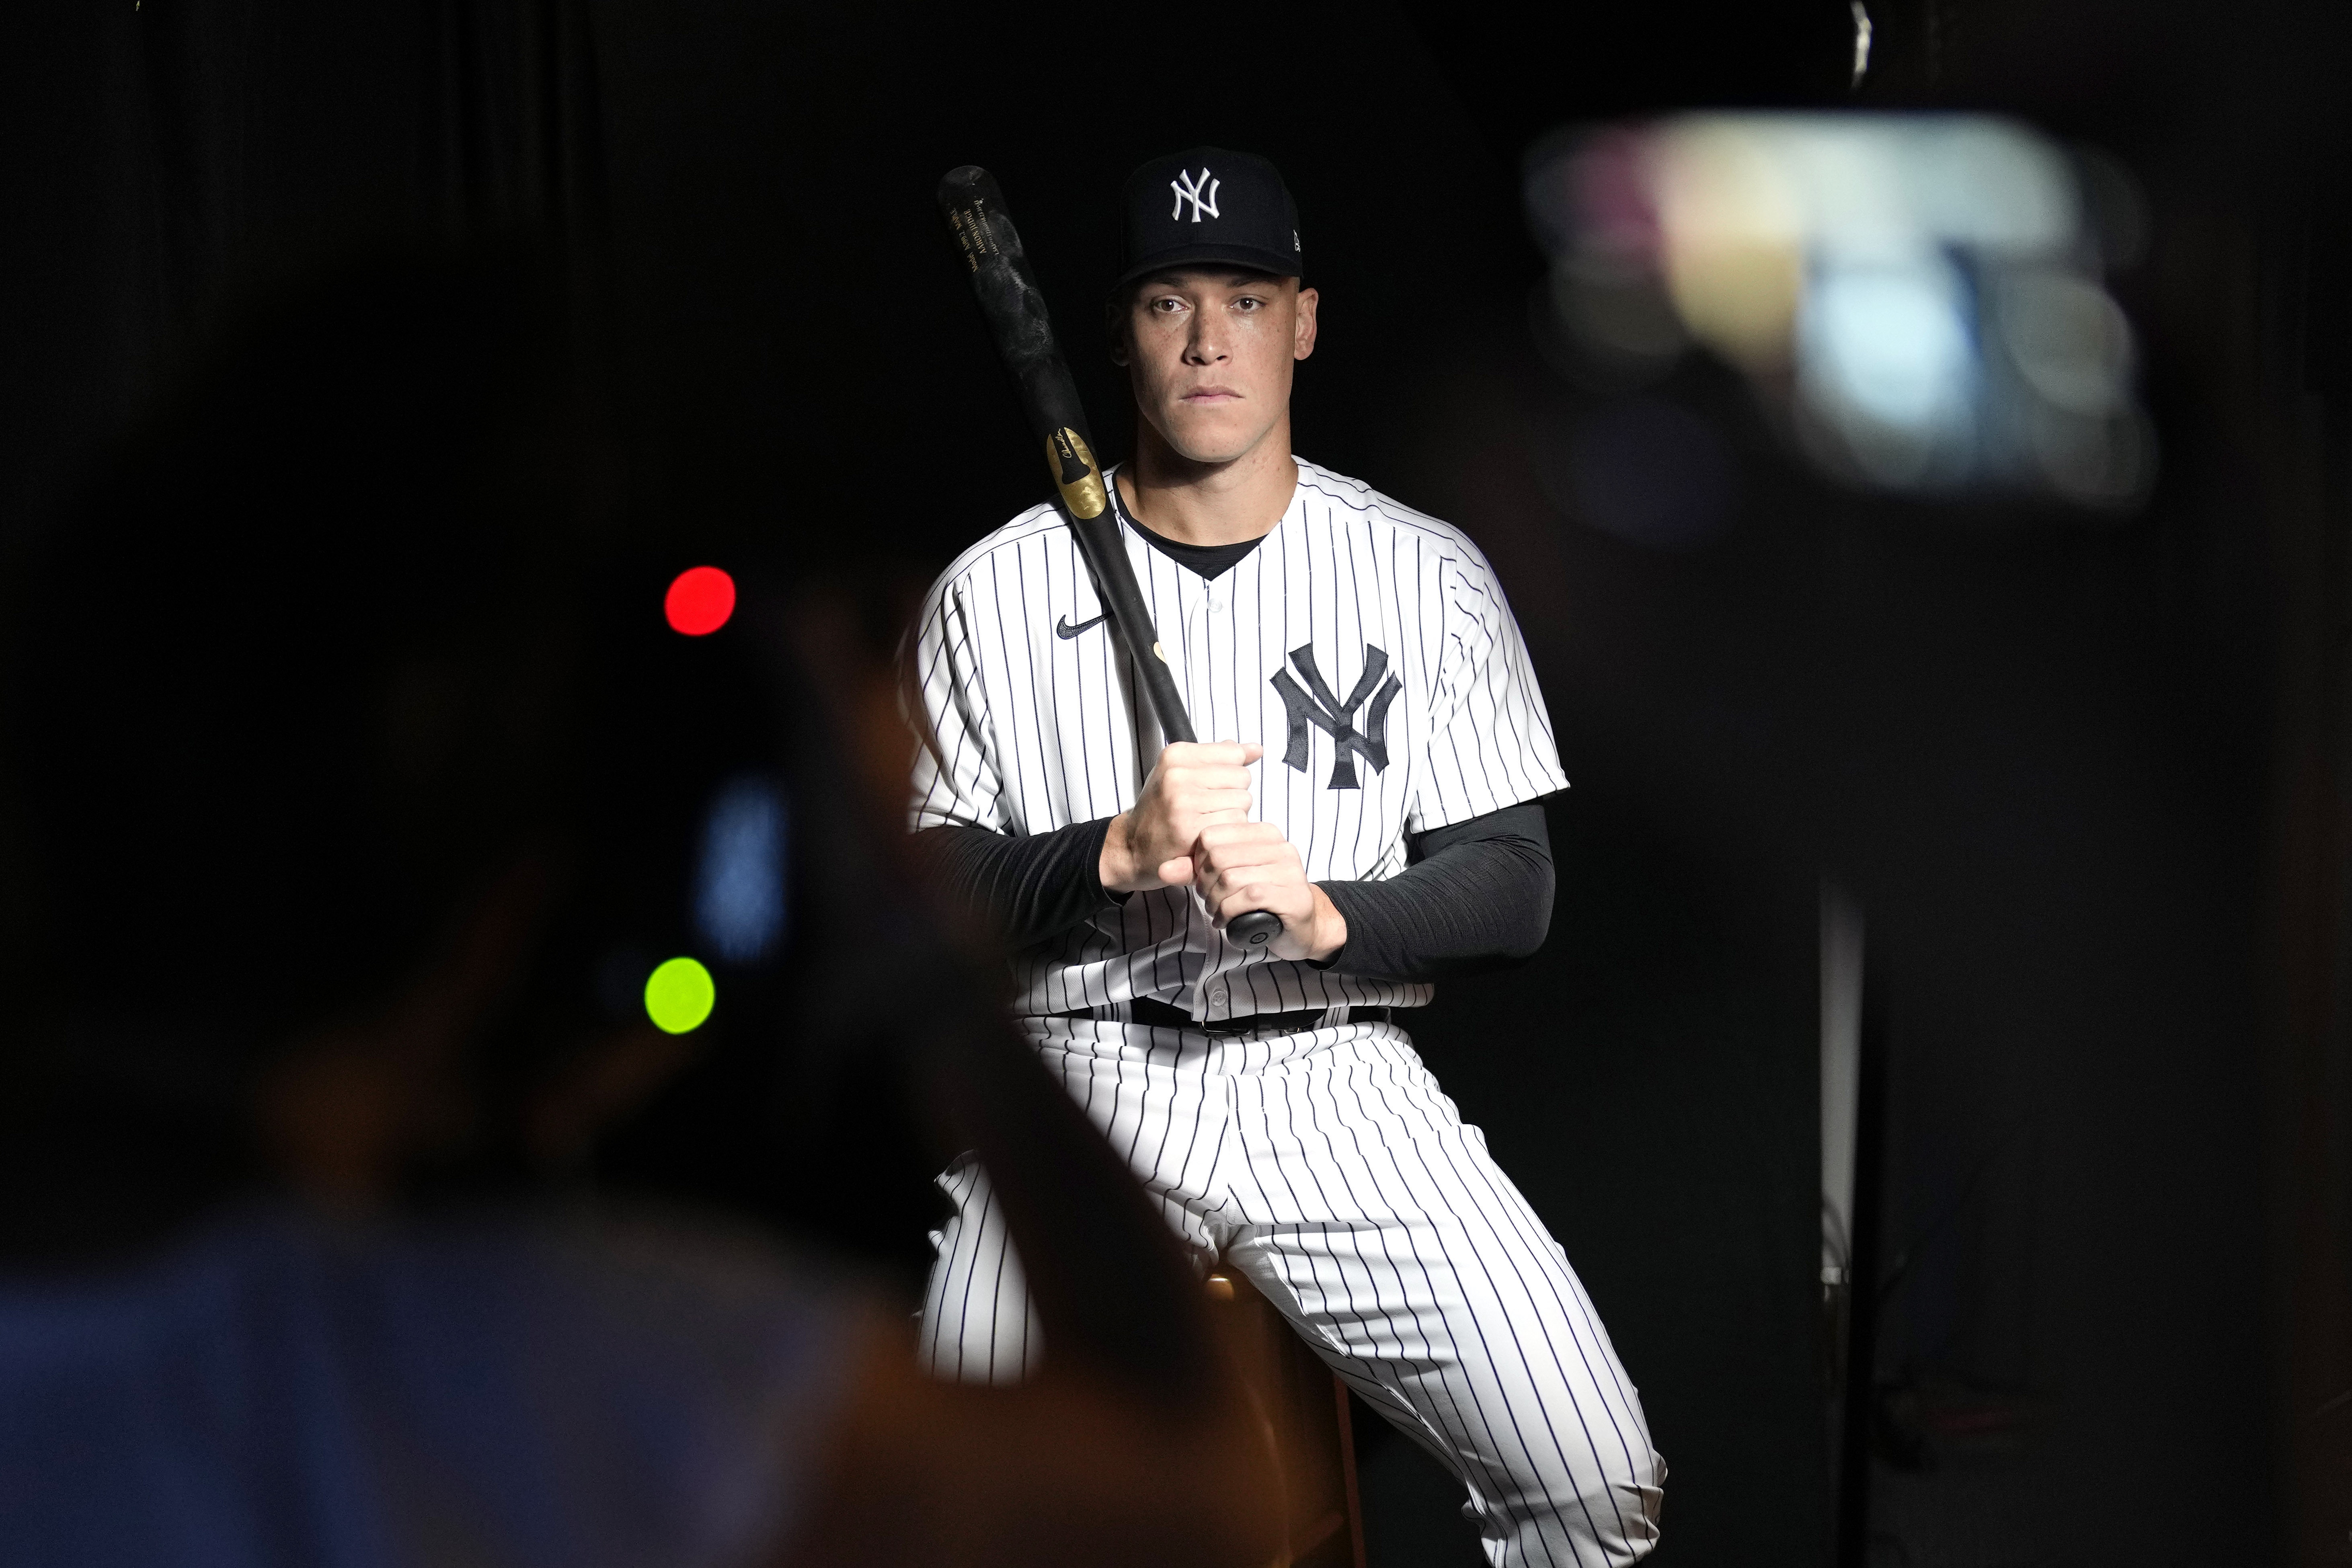 Mlb New York Yankees Aaron Judge Jersey - L : Target